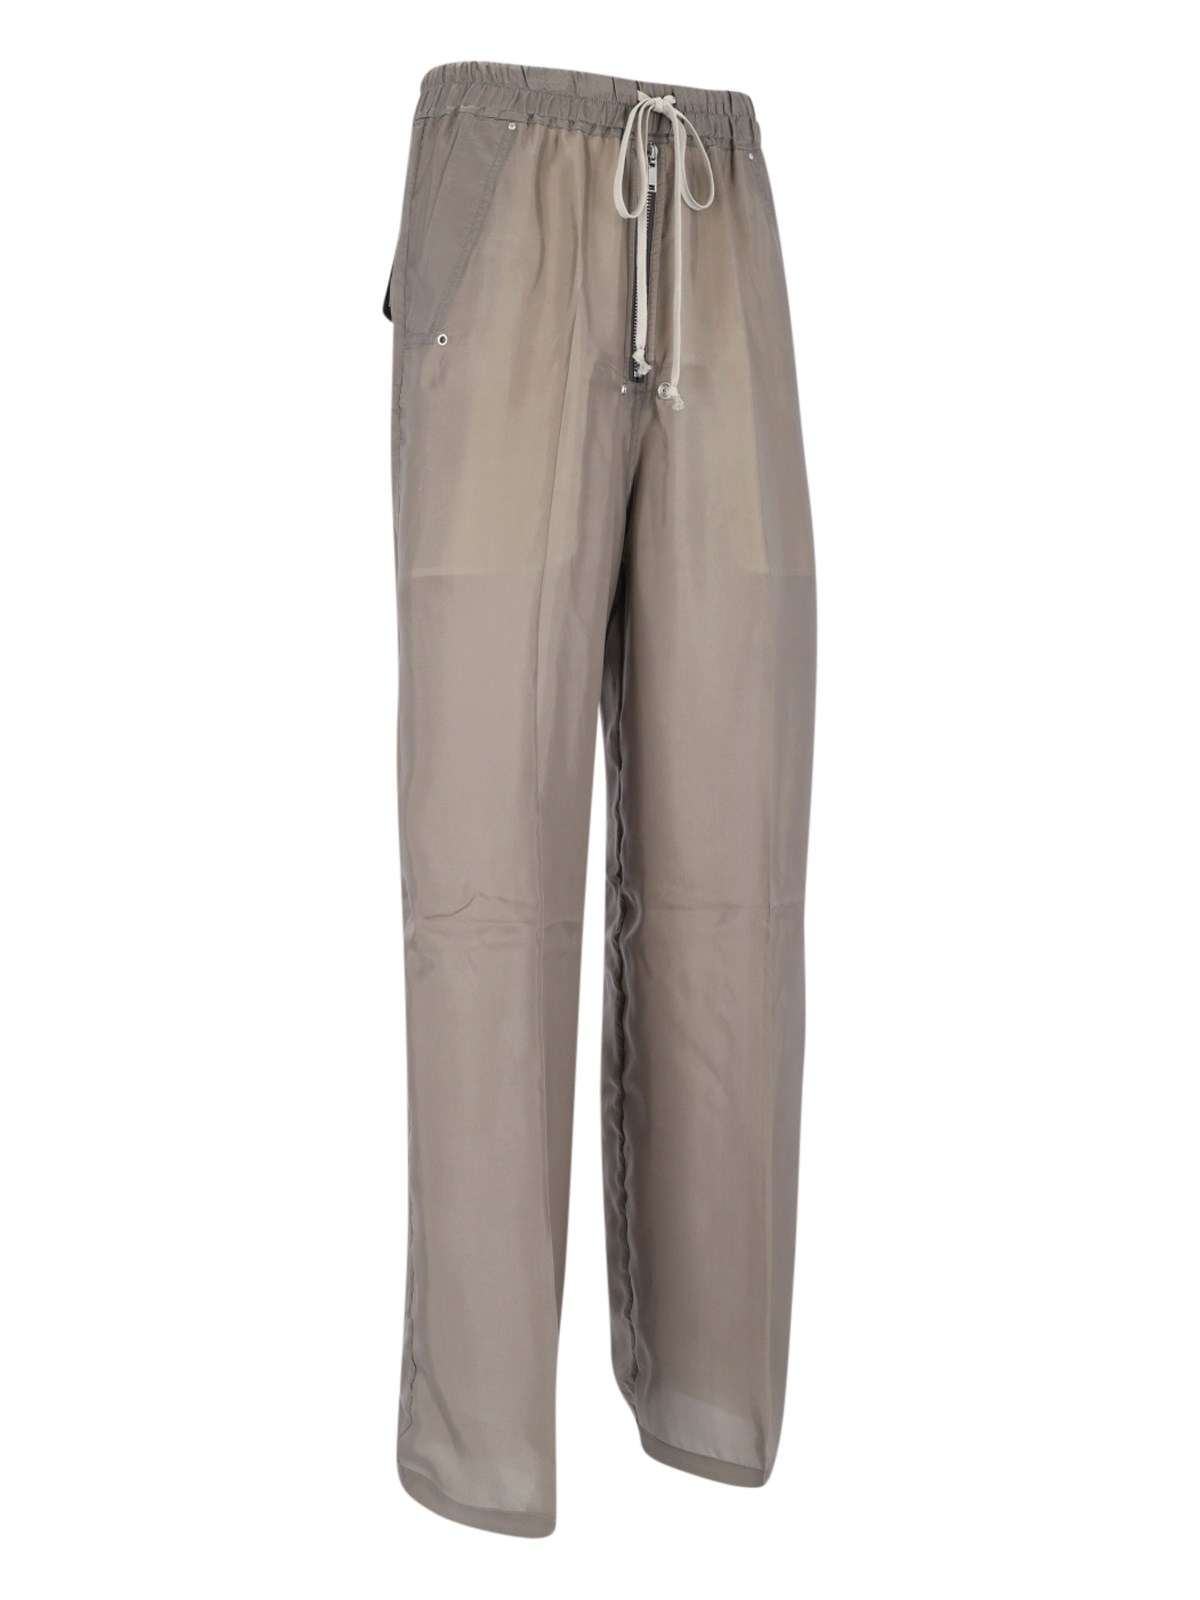 Rick owens 'geth belas' wide pants available on SUGAR - 145298